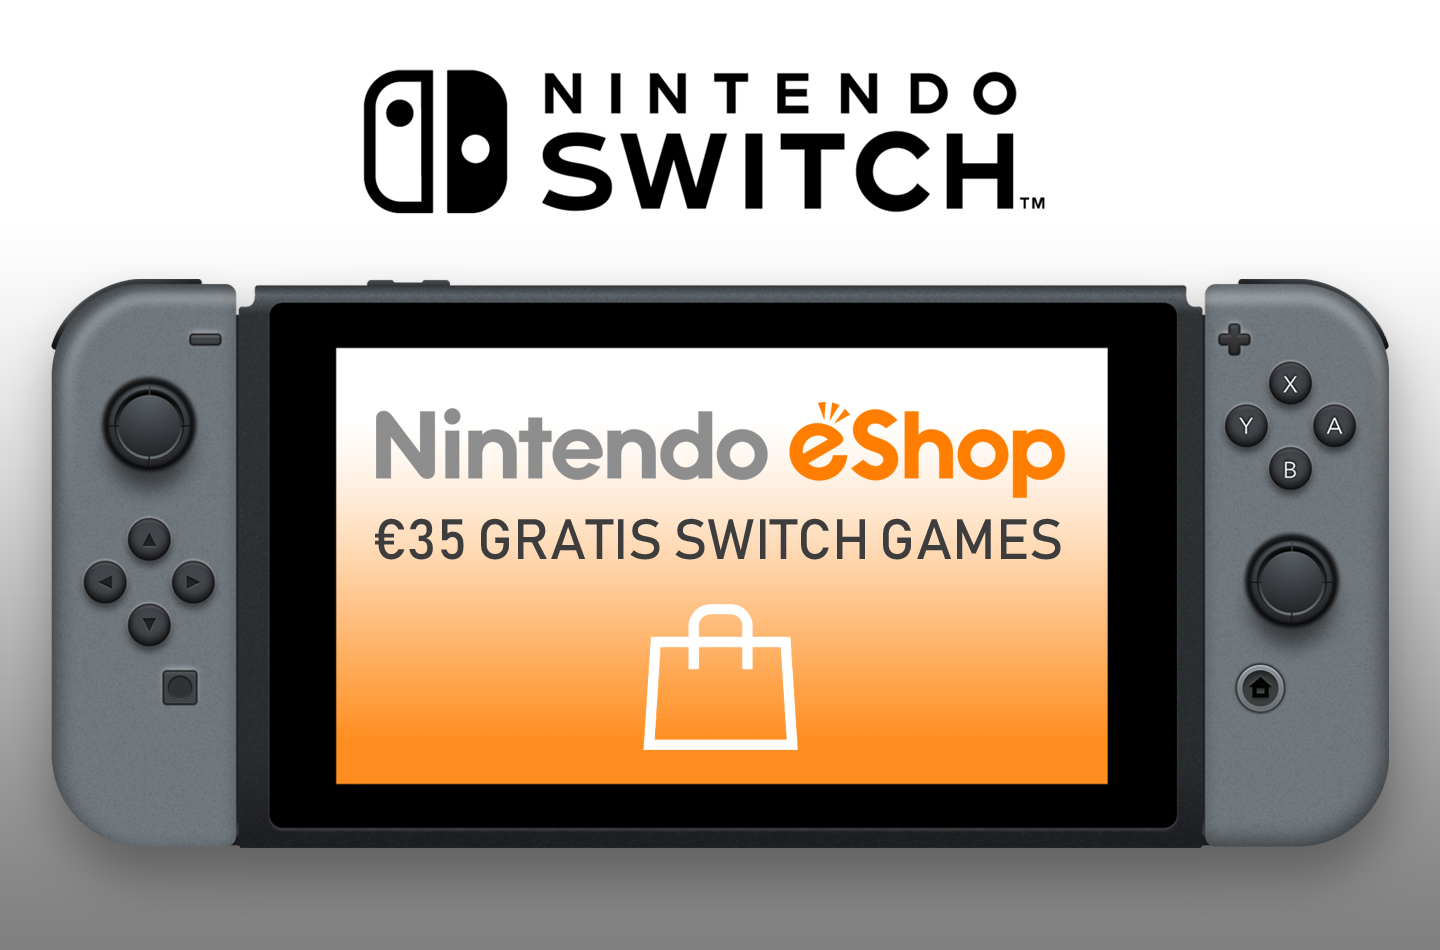 snijder Amerika toernooi Nintendo Switch kopen met gratis eShop tegoed | LetsGoDigital